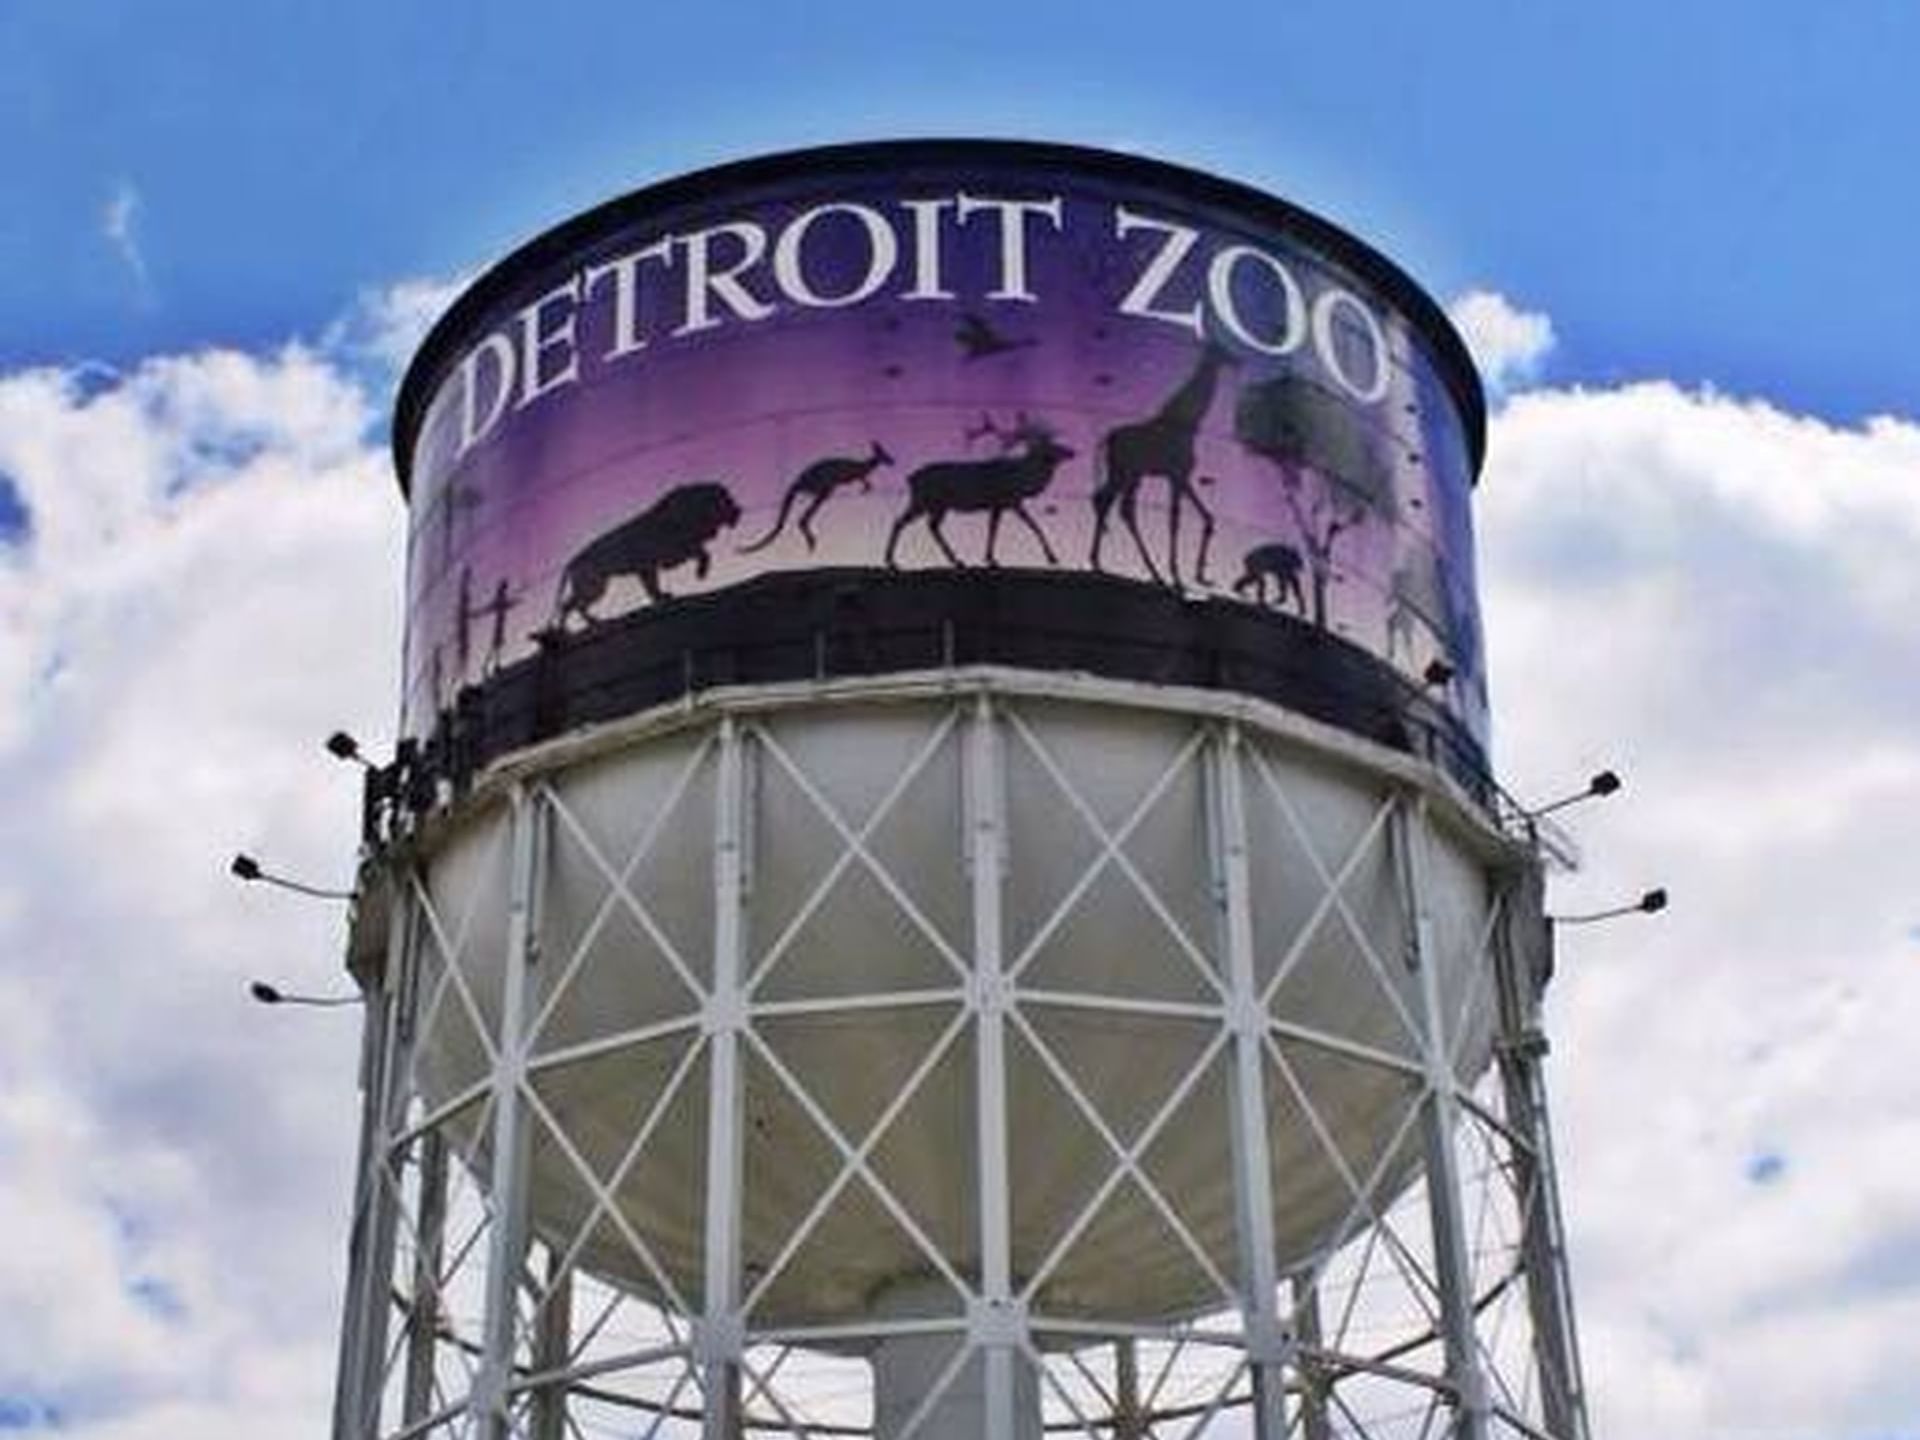 View of the water tank in Detroit Zoo near Kingsley